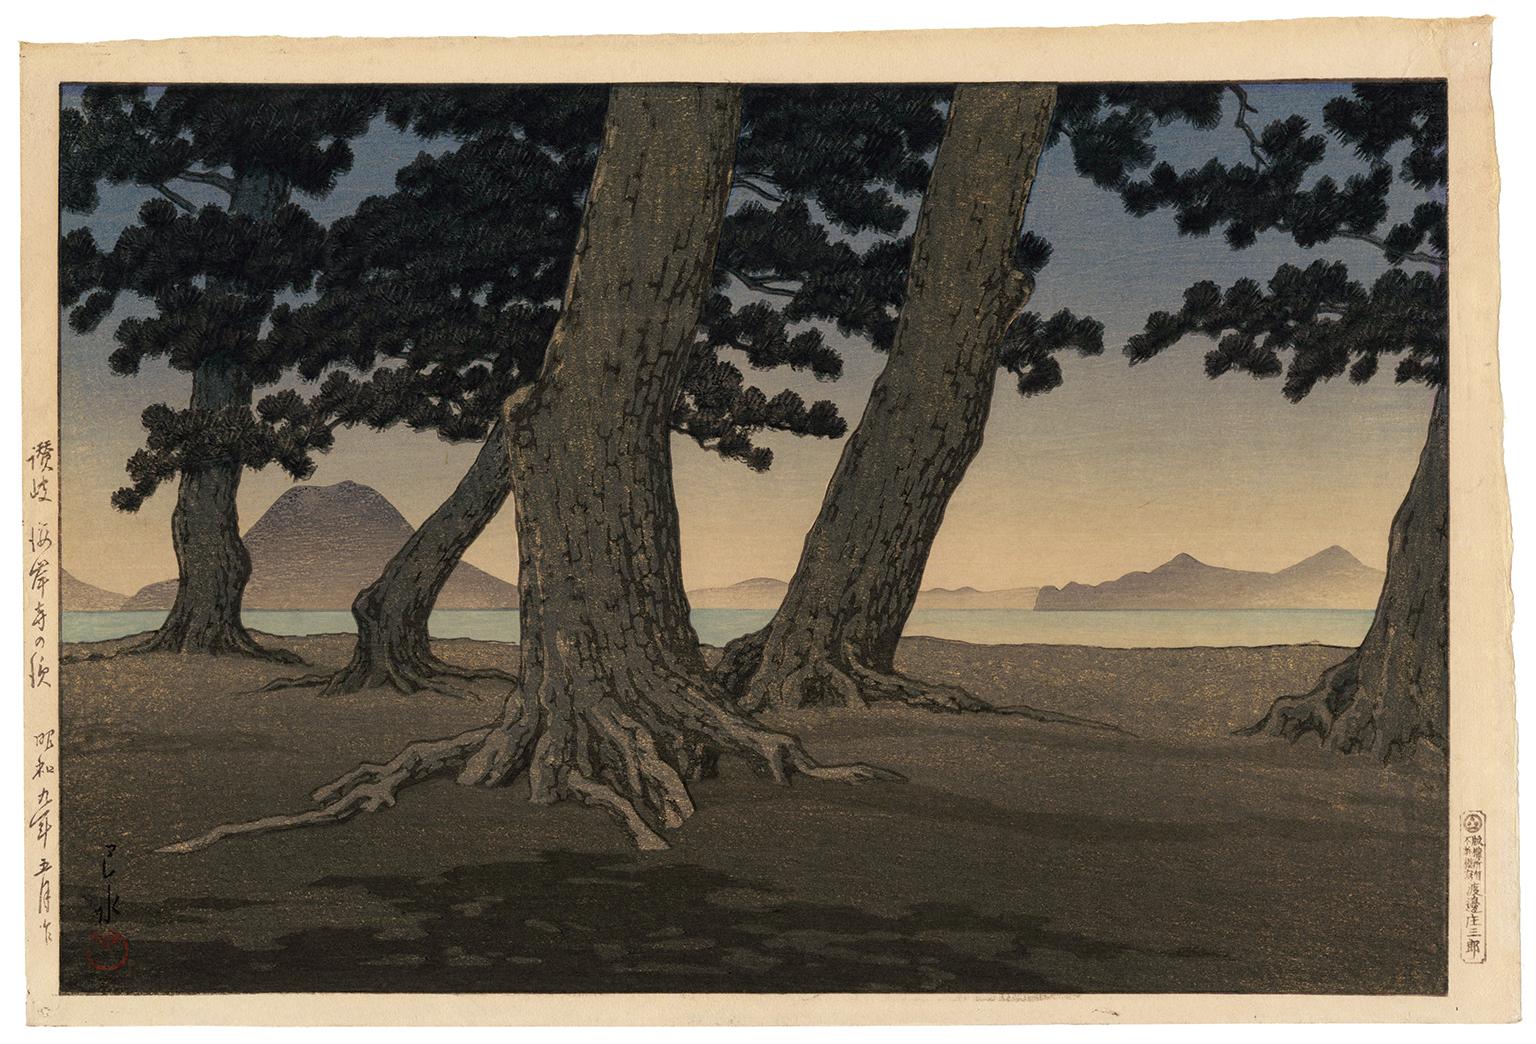 Kawase Hasui Landscape Print - The Beach at Kaiganji in Sanuki Province  — Lifetime Impression, 1934